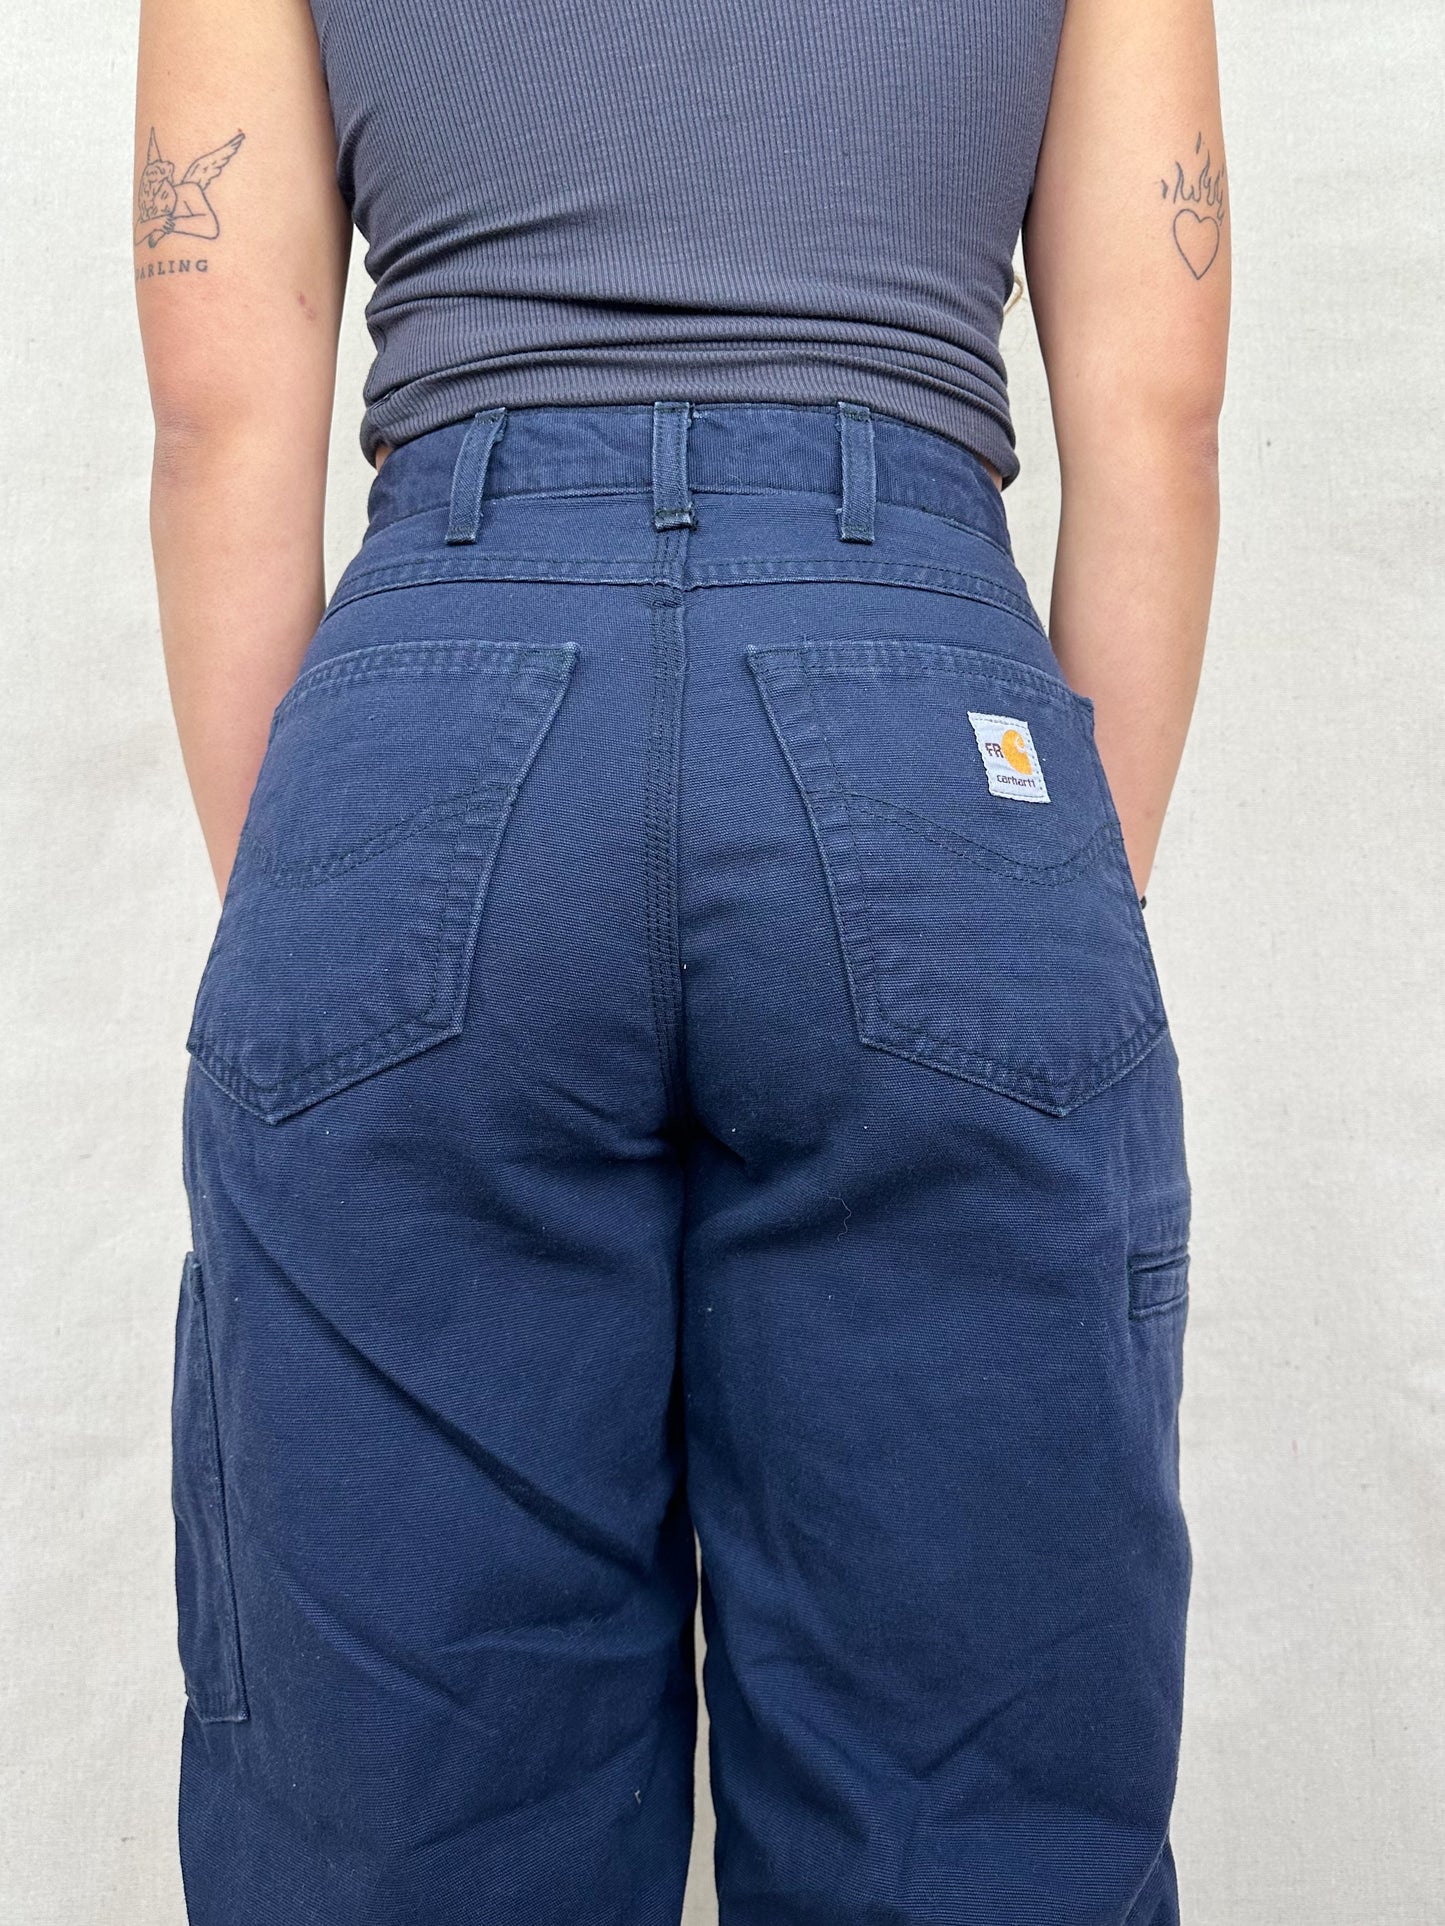 90's Carhartt Vintage Pants Size 27x31